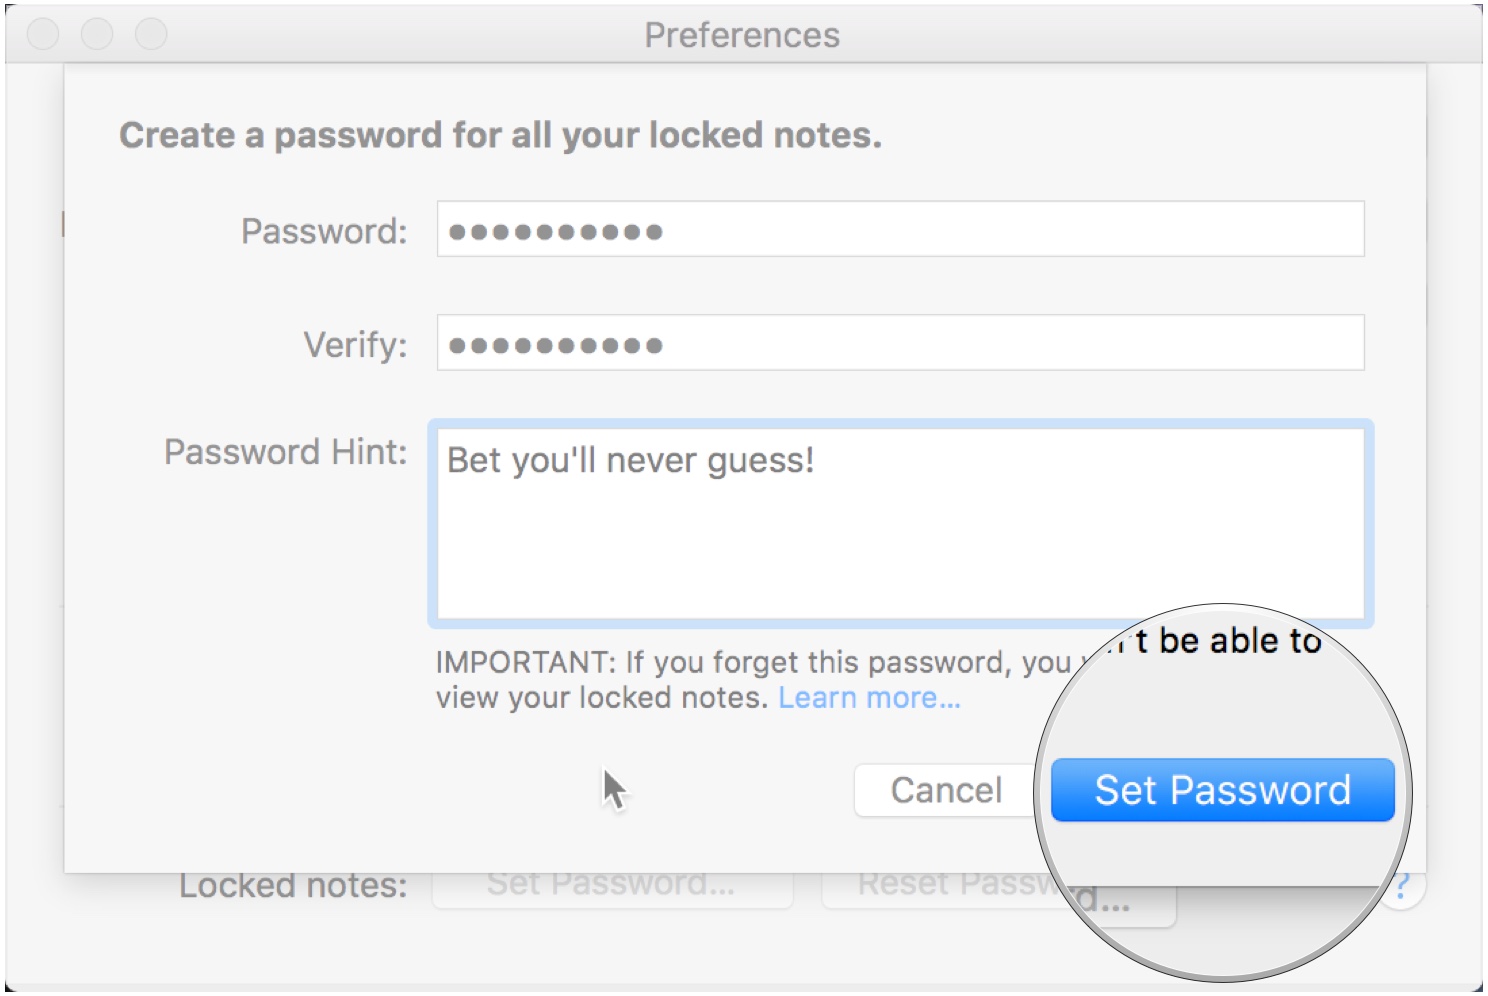 Click Set Password